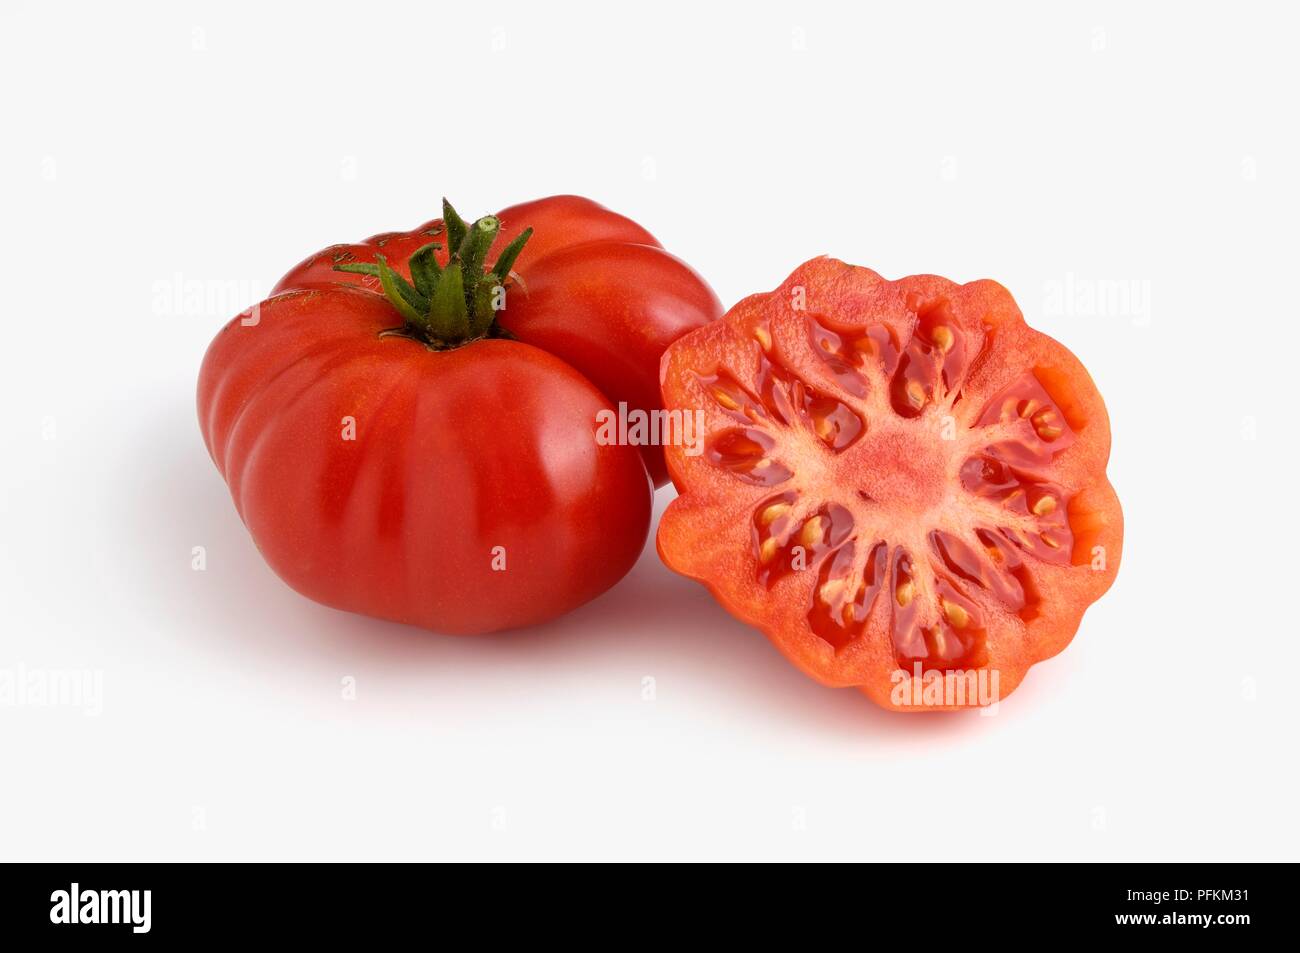 Whole and sliced Italian Costoluto Fiorentino tomatoes Stock Photo